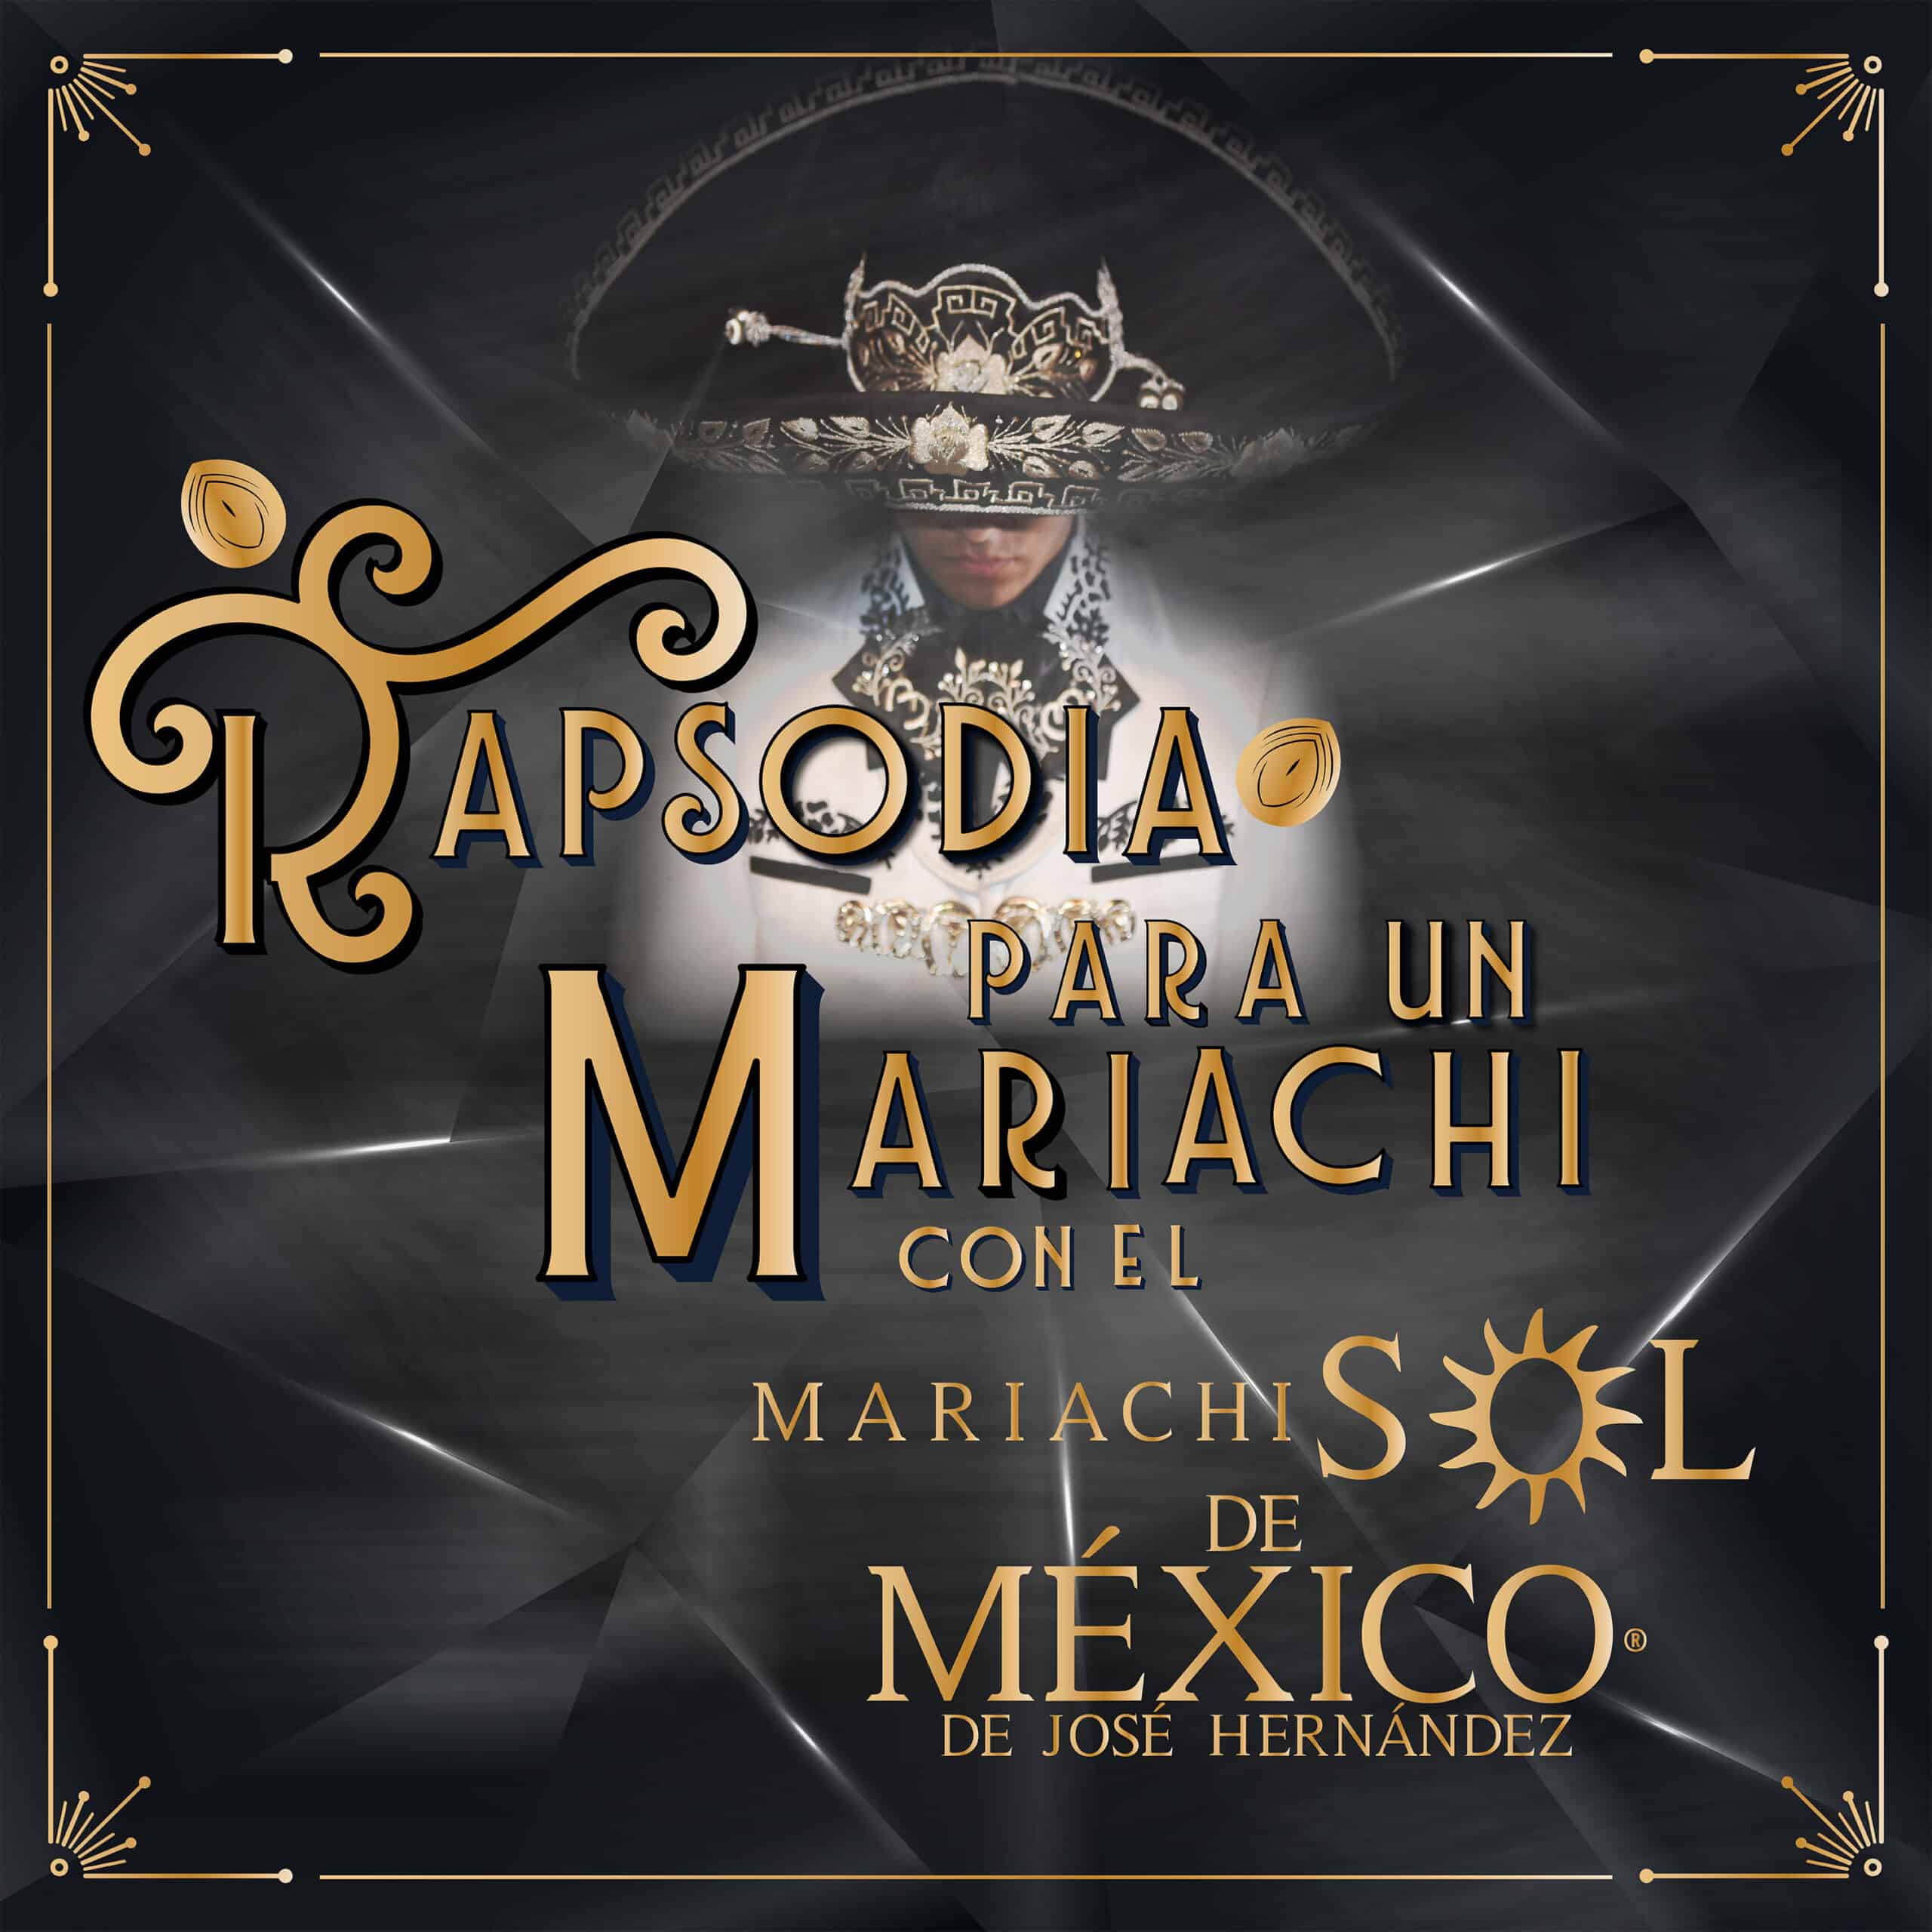 Rapsodia para un mariachi refresca la música mexicana